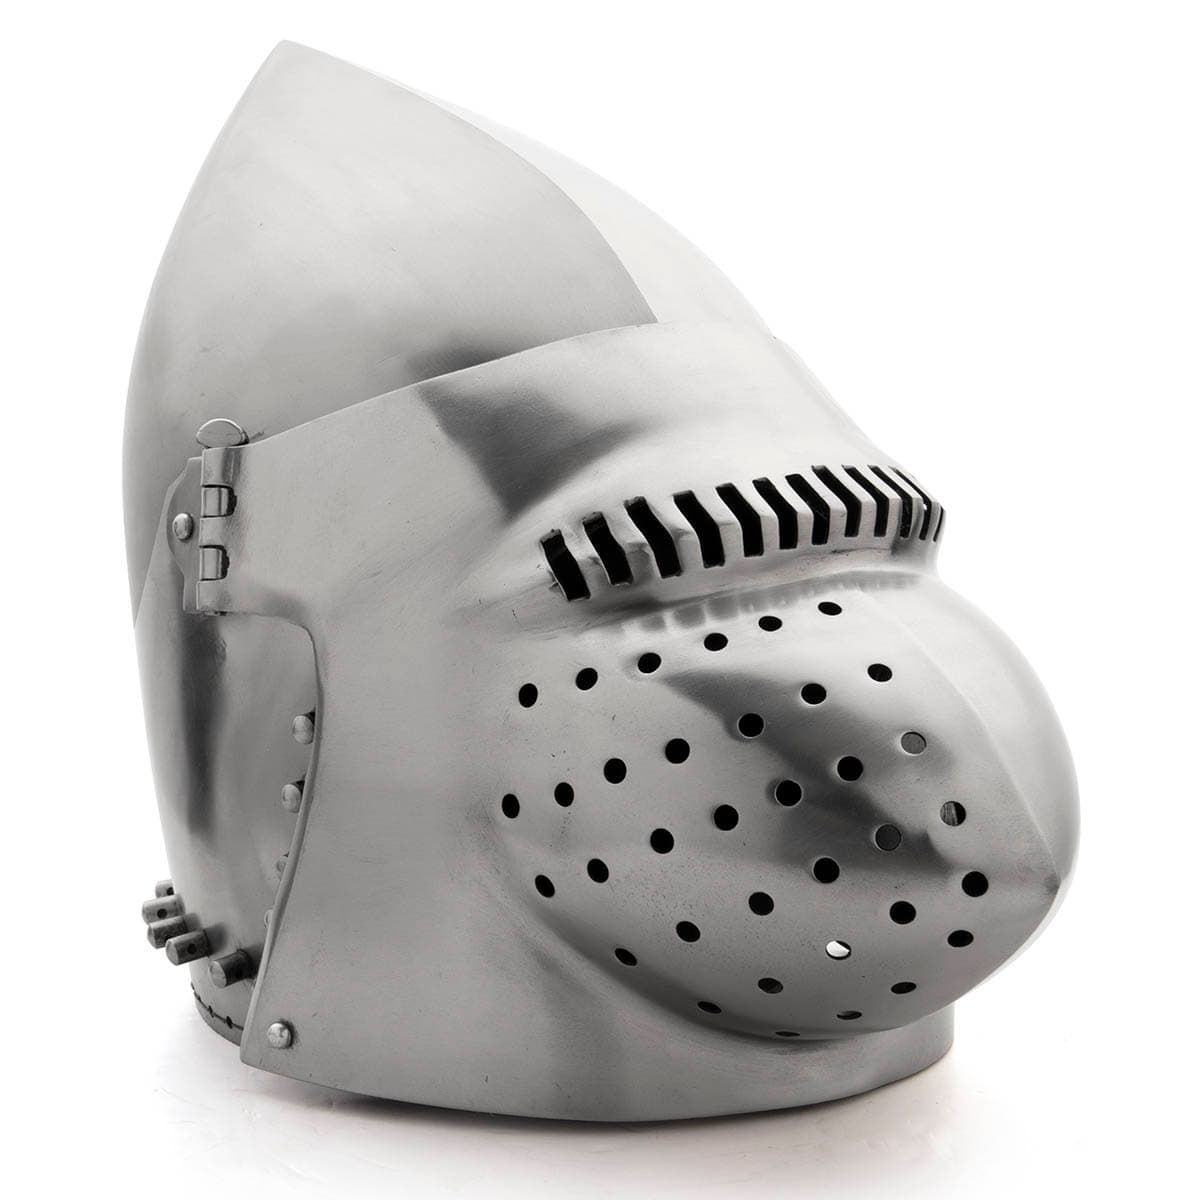 18 gauge steel Hounskull Medieval Helmet has a removable snoutlike visor attached to a bascinet